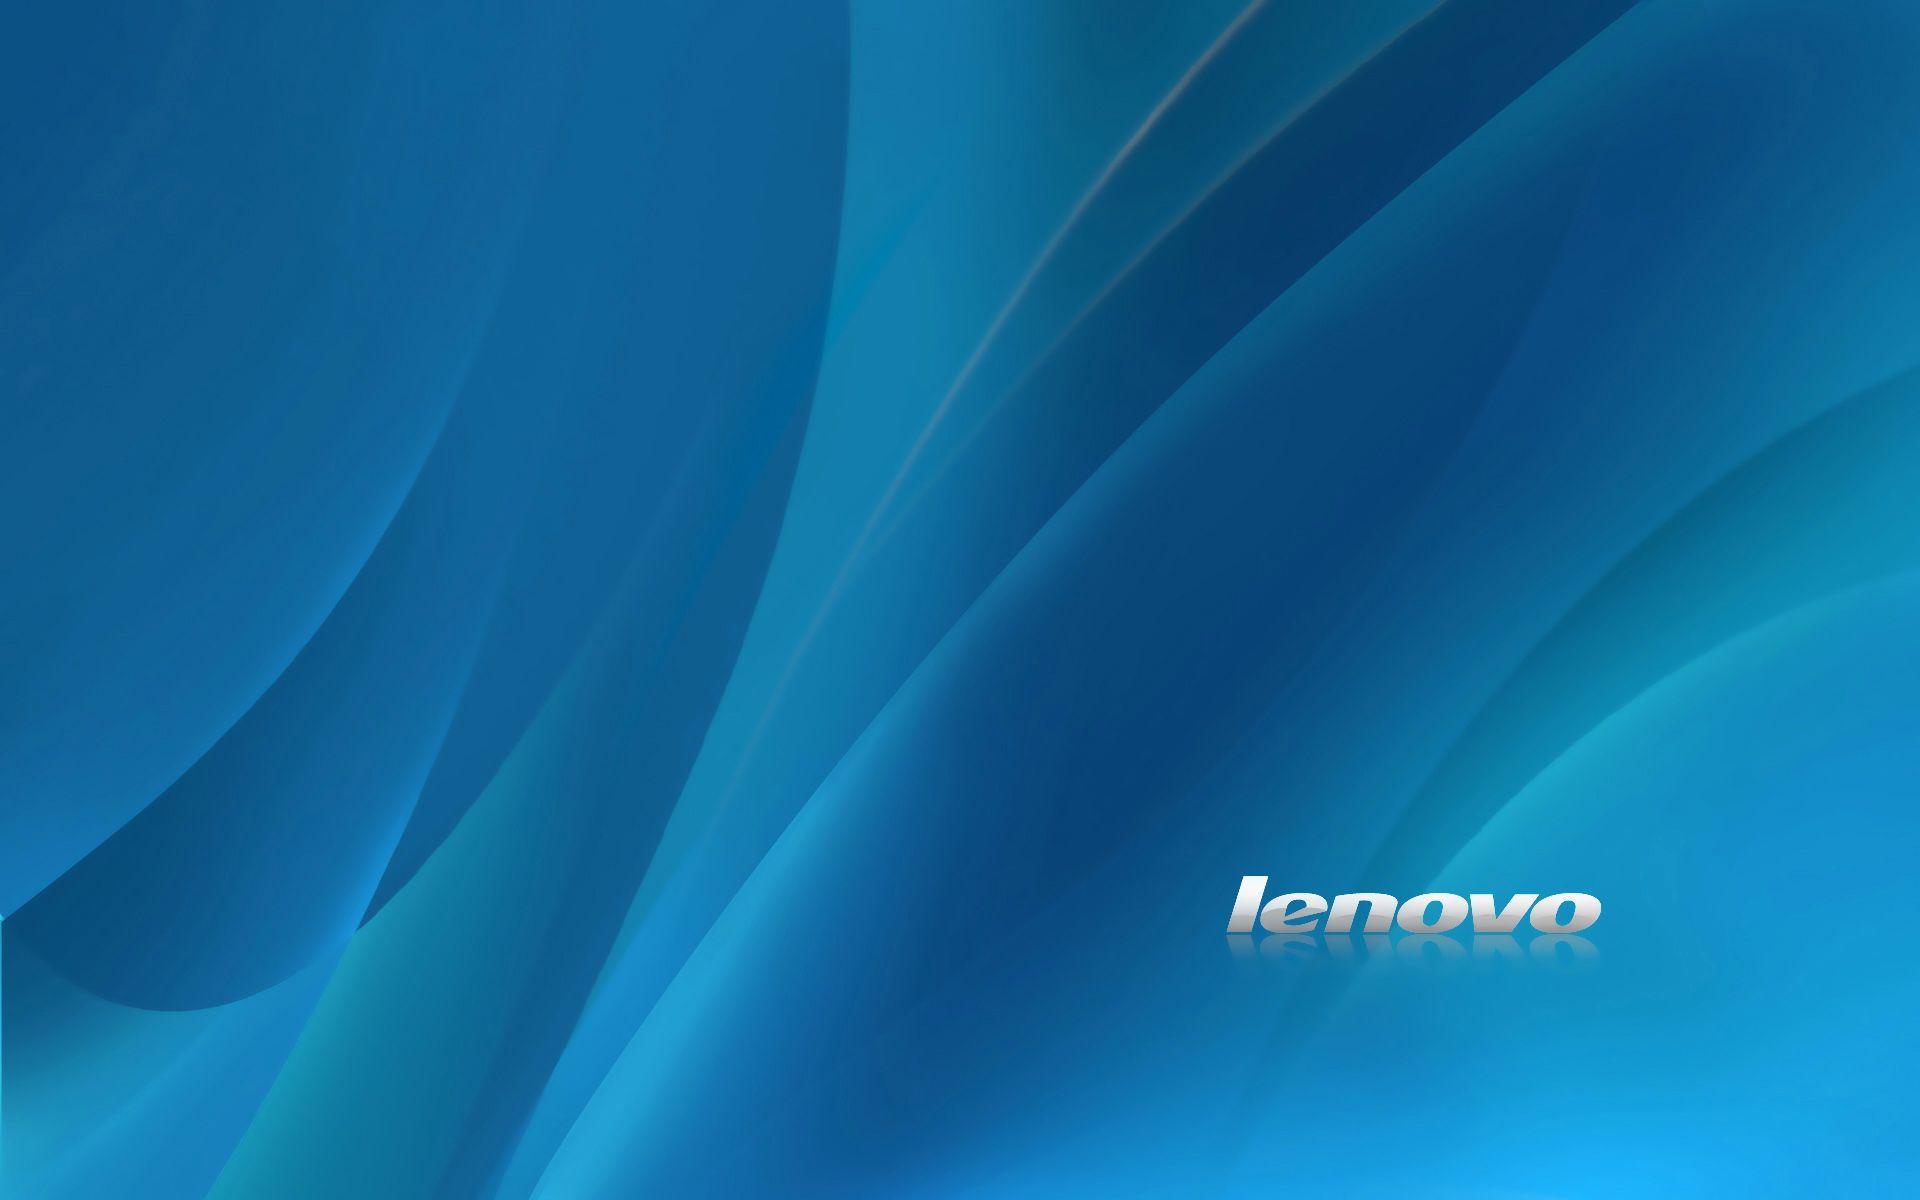 Lenovo Desktop Backgrounds 1920X1080